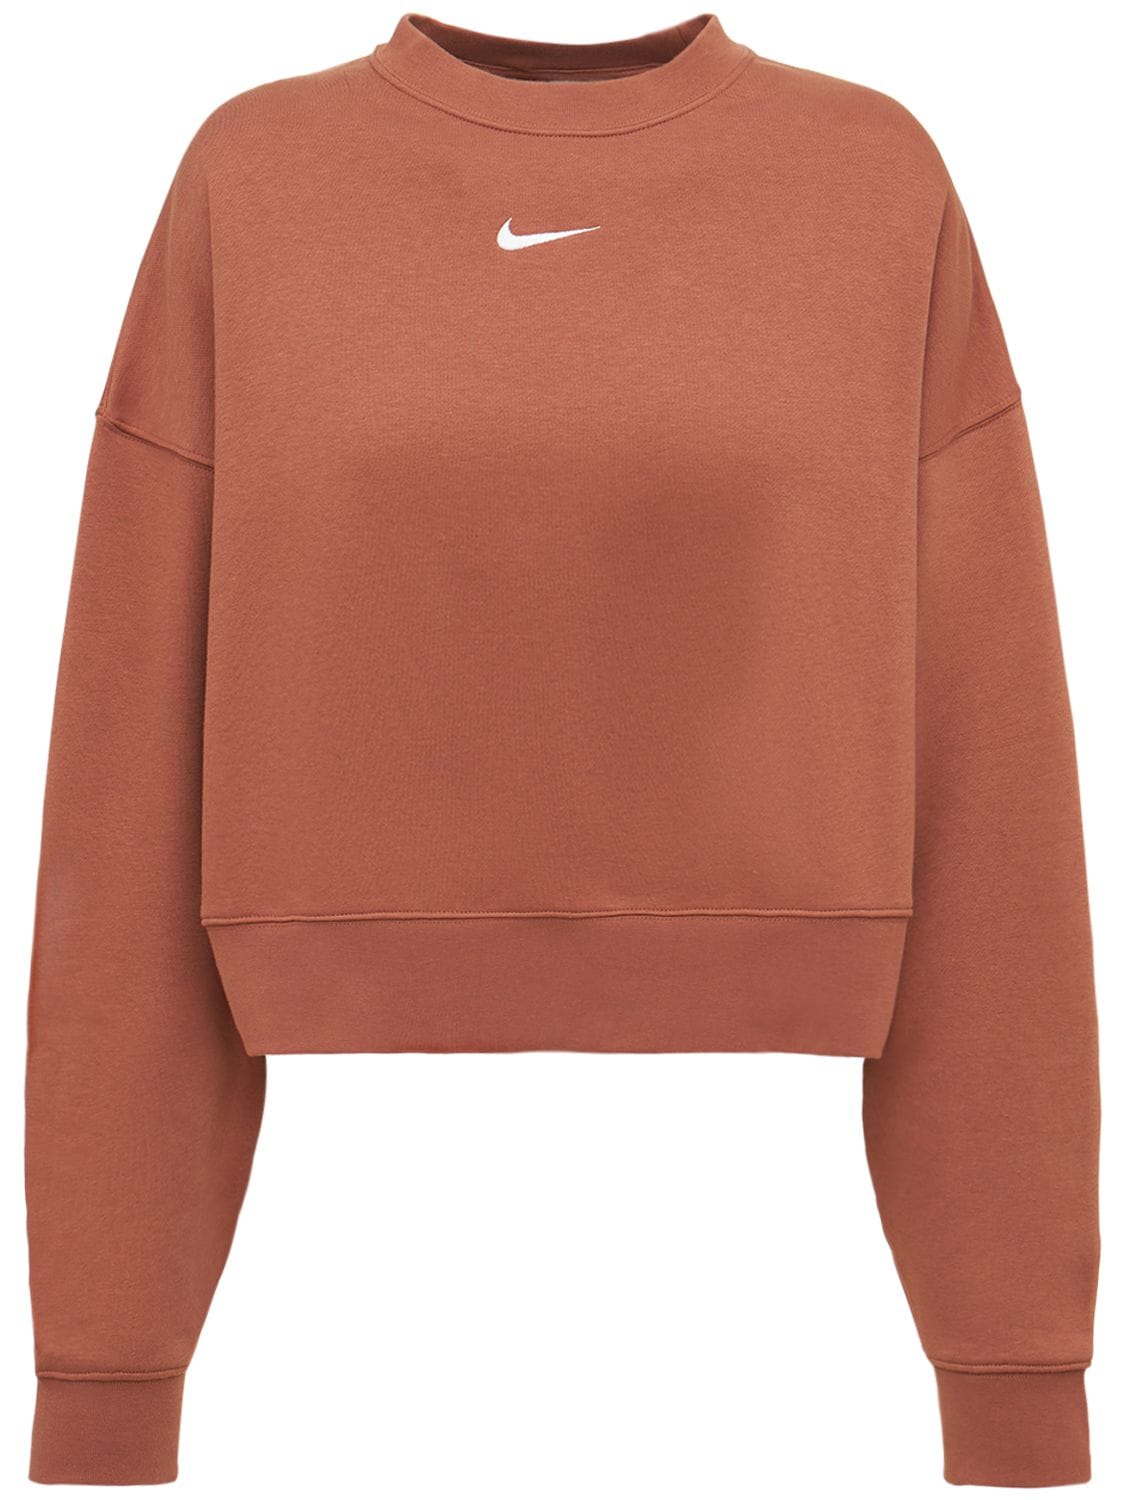 Nike Oversized Cotton Blend Sweatshirt